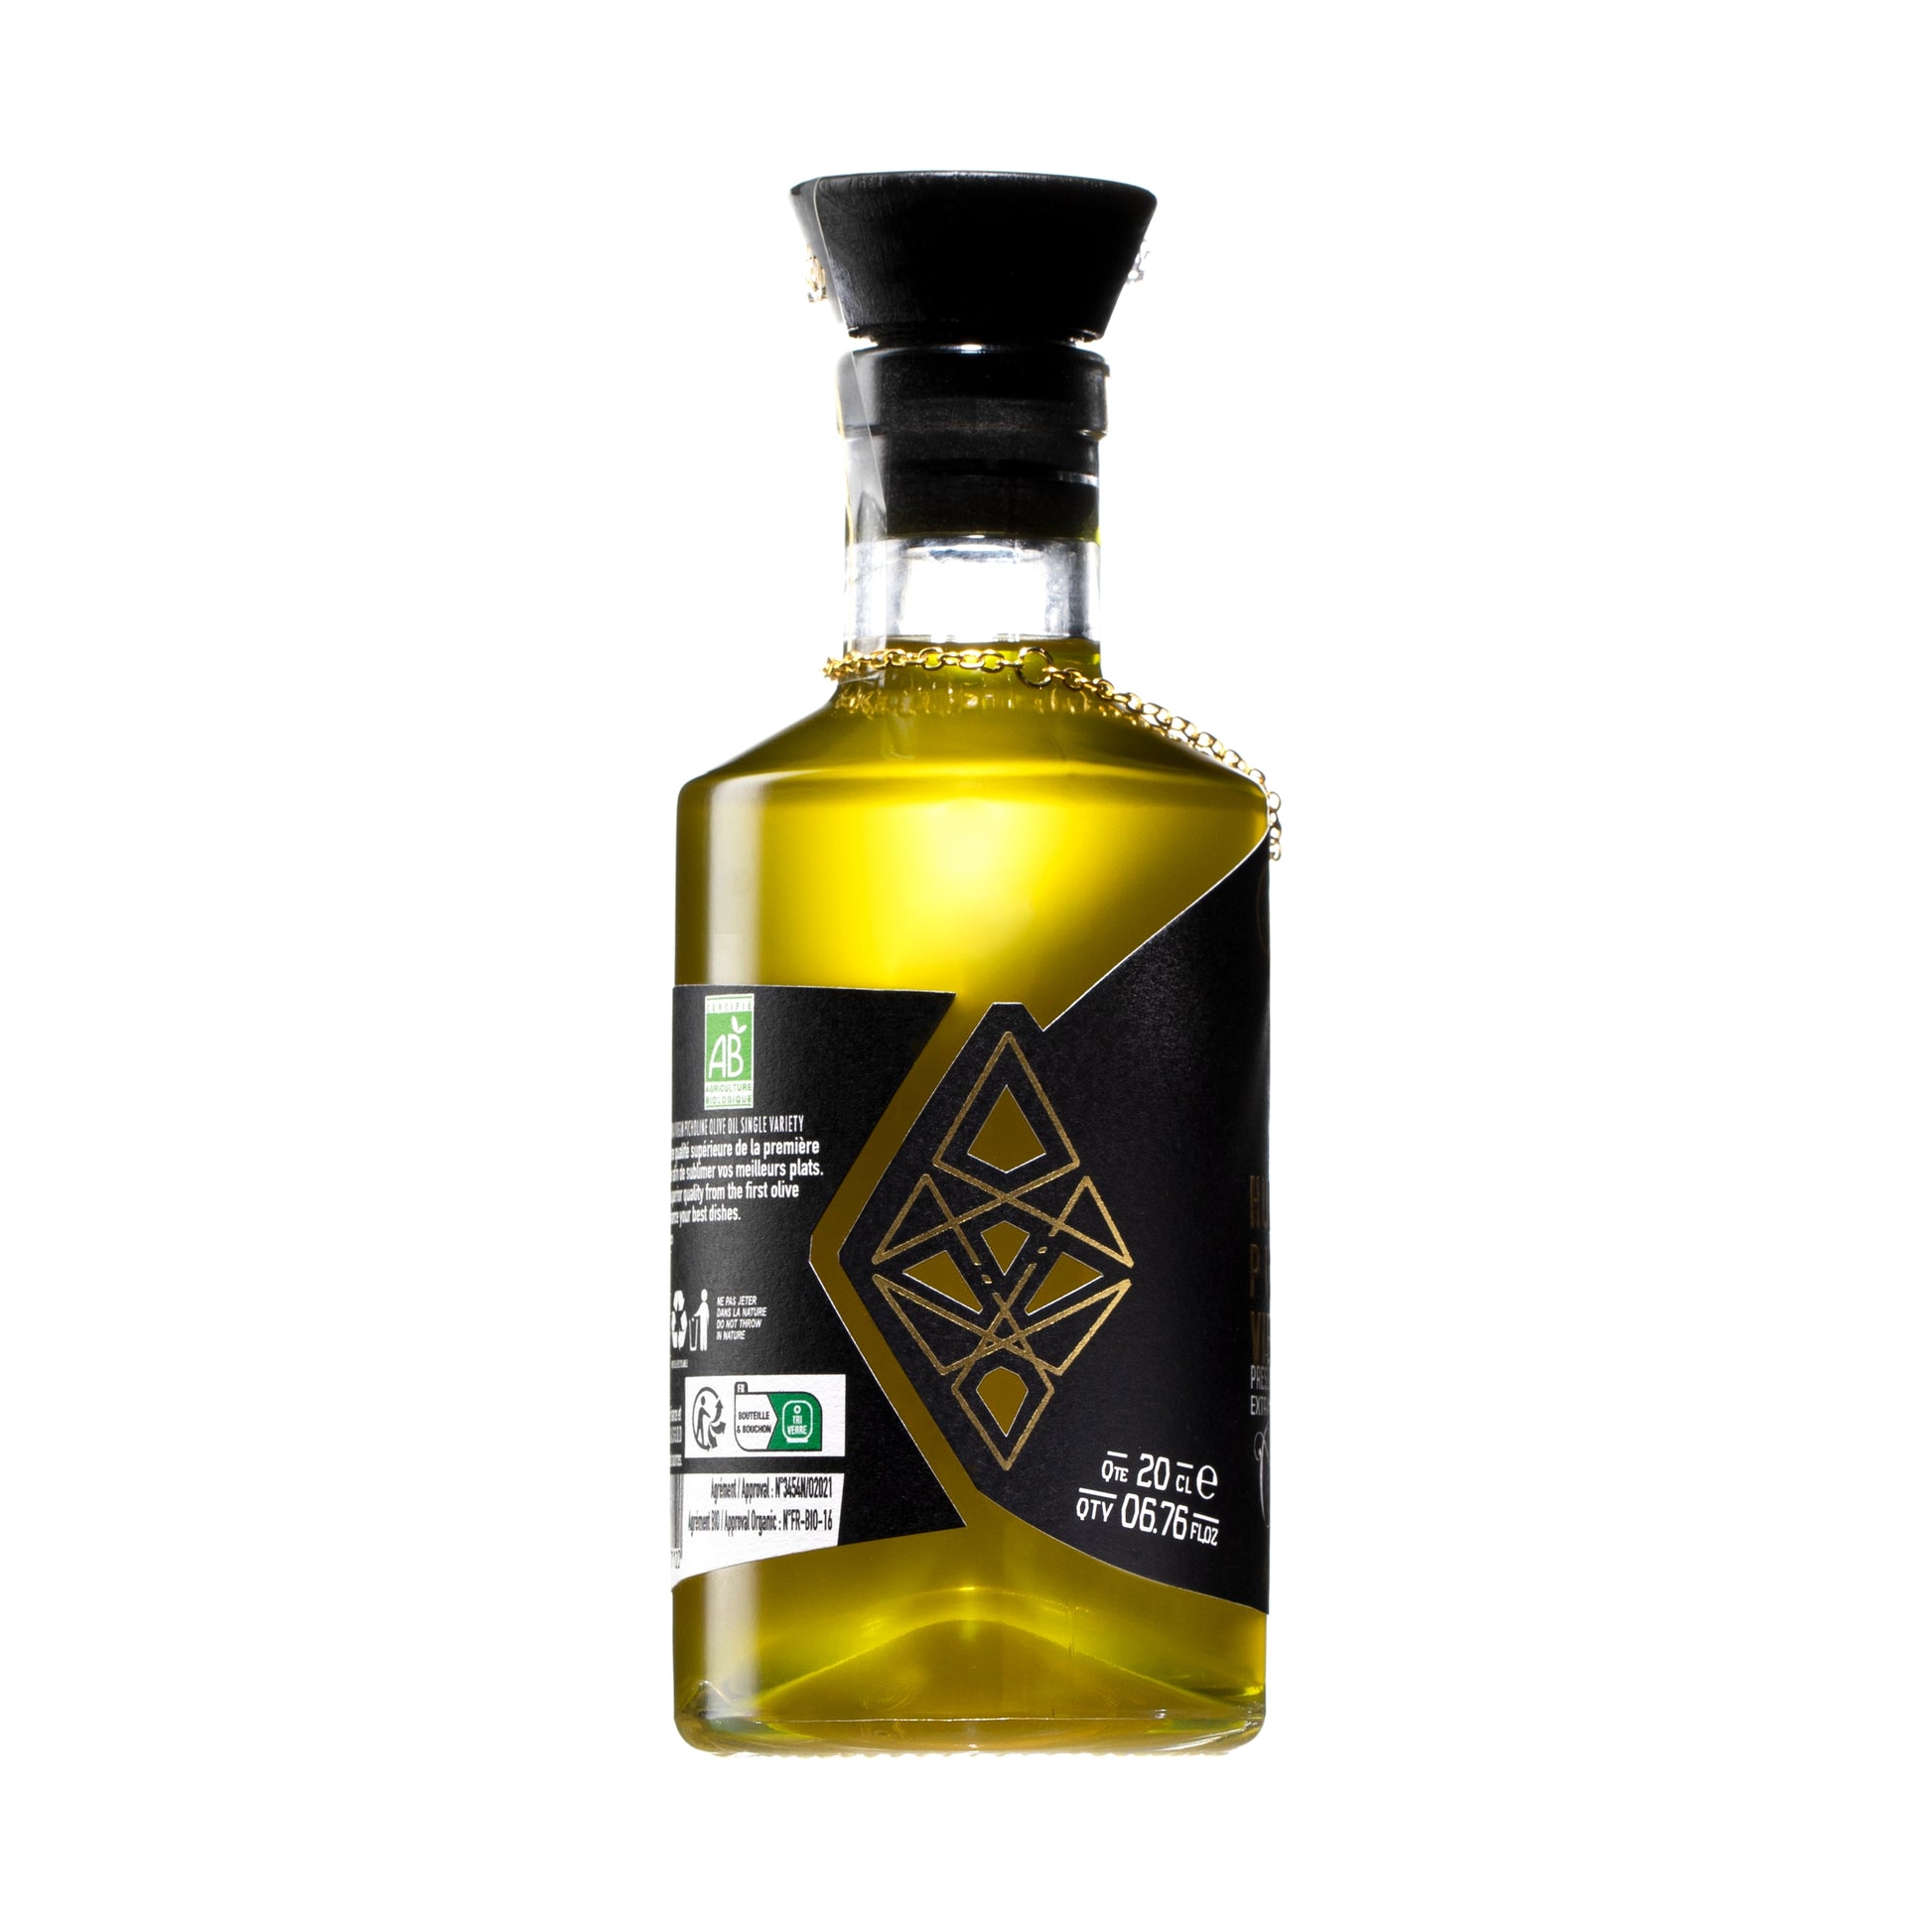 Oleisys® Organic Extra Virgin Picholine Olive Oil 200ml.